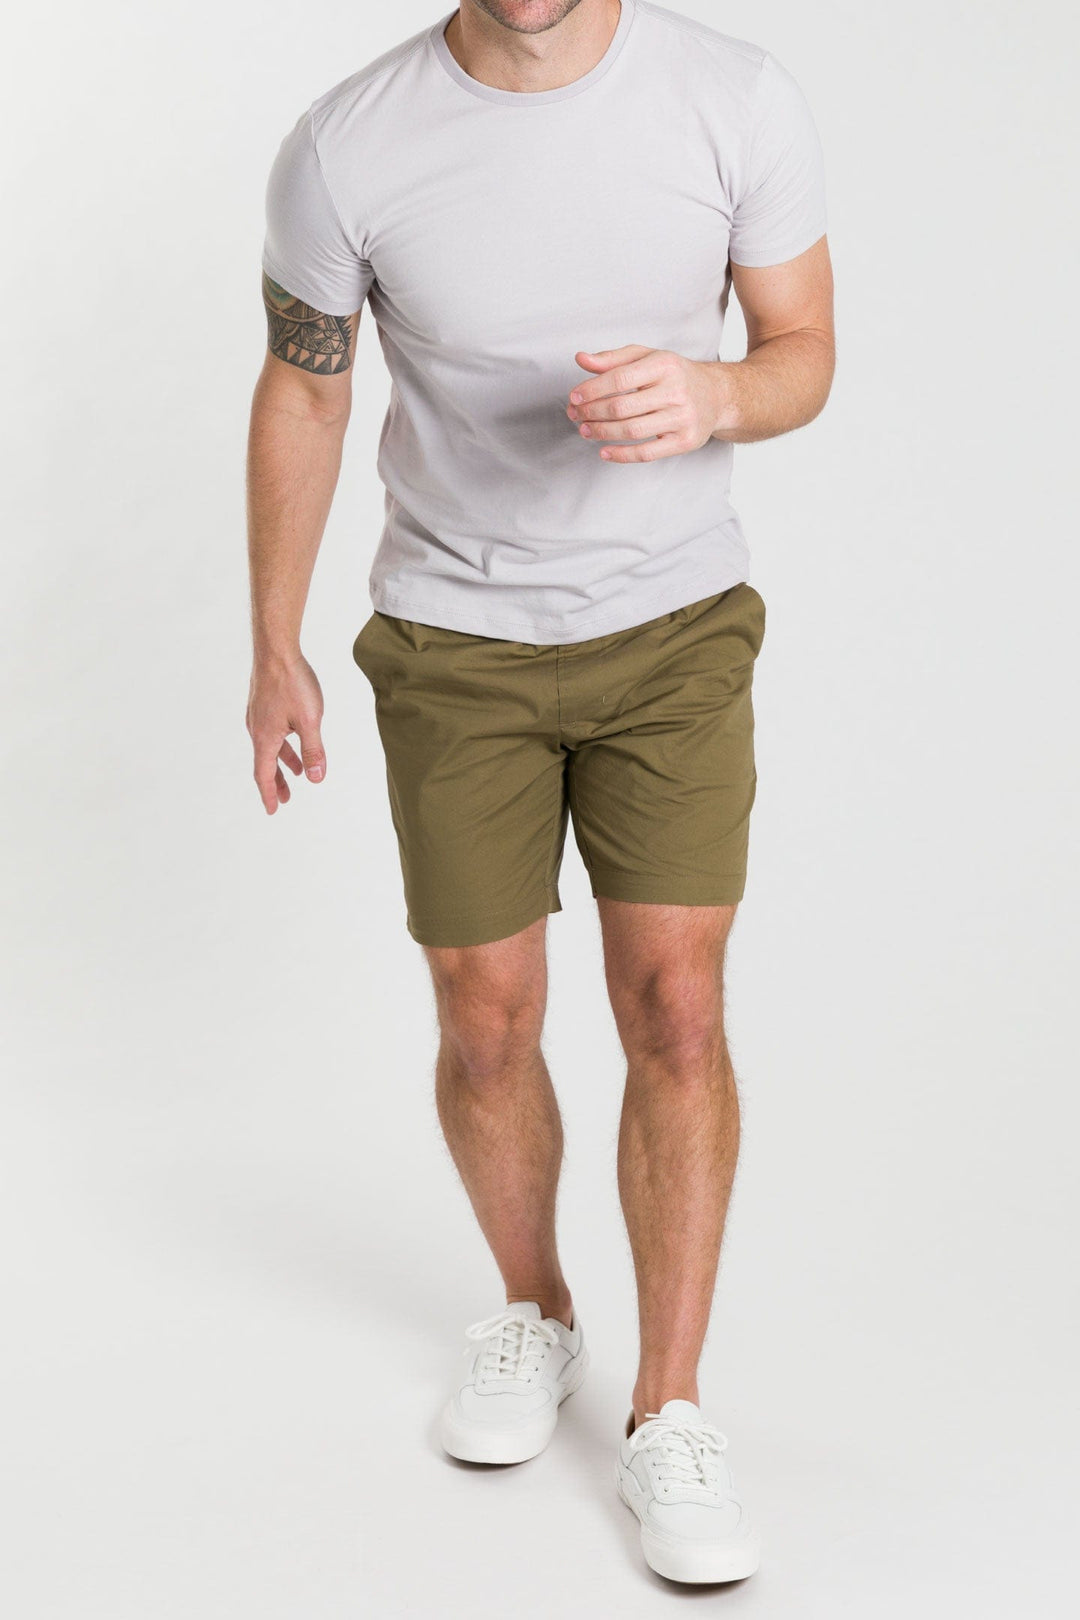 Buy Dark Olive Walking Shorts for Short Men | Ash & Erie   Walking Shorts